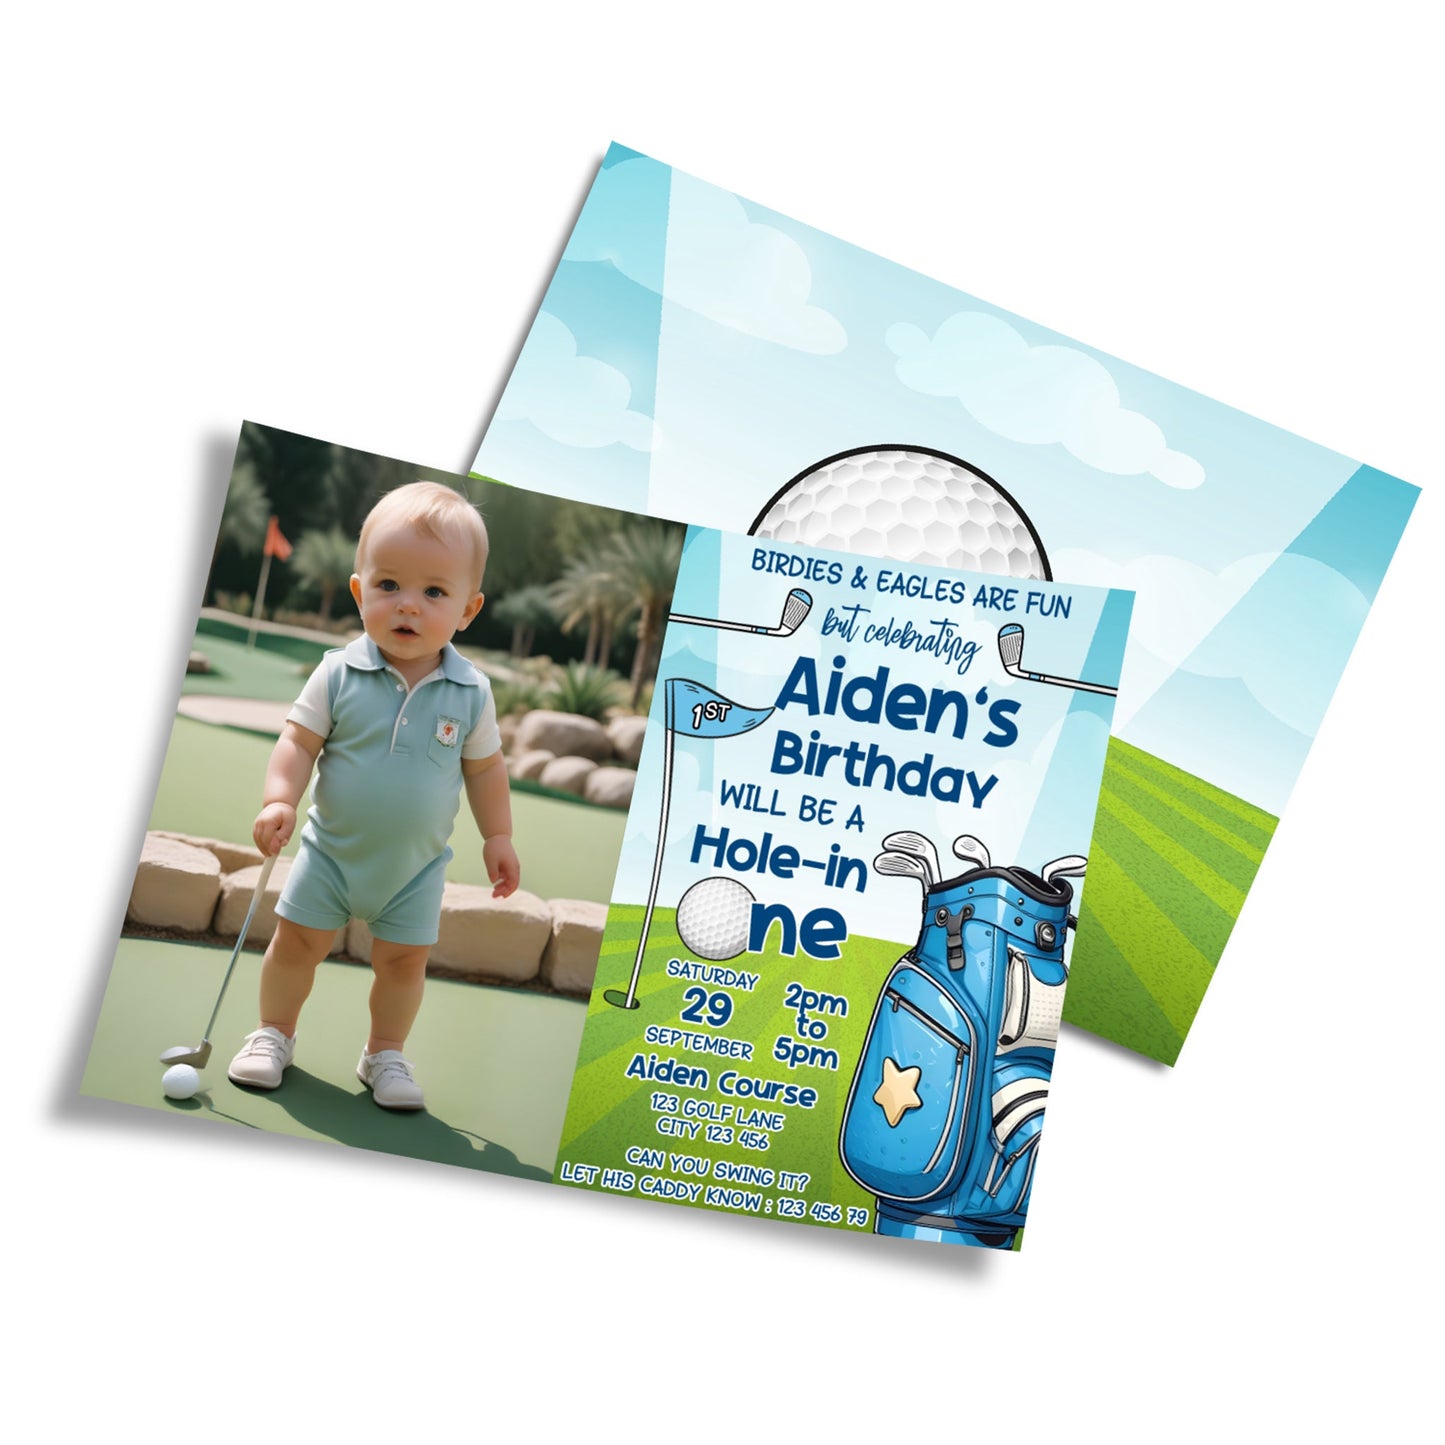 Mini Golf Personalized Photo Card Invitations: Custom photo card invitations showcasing mini golf elements